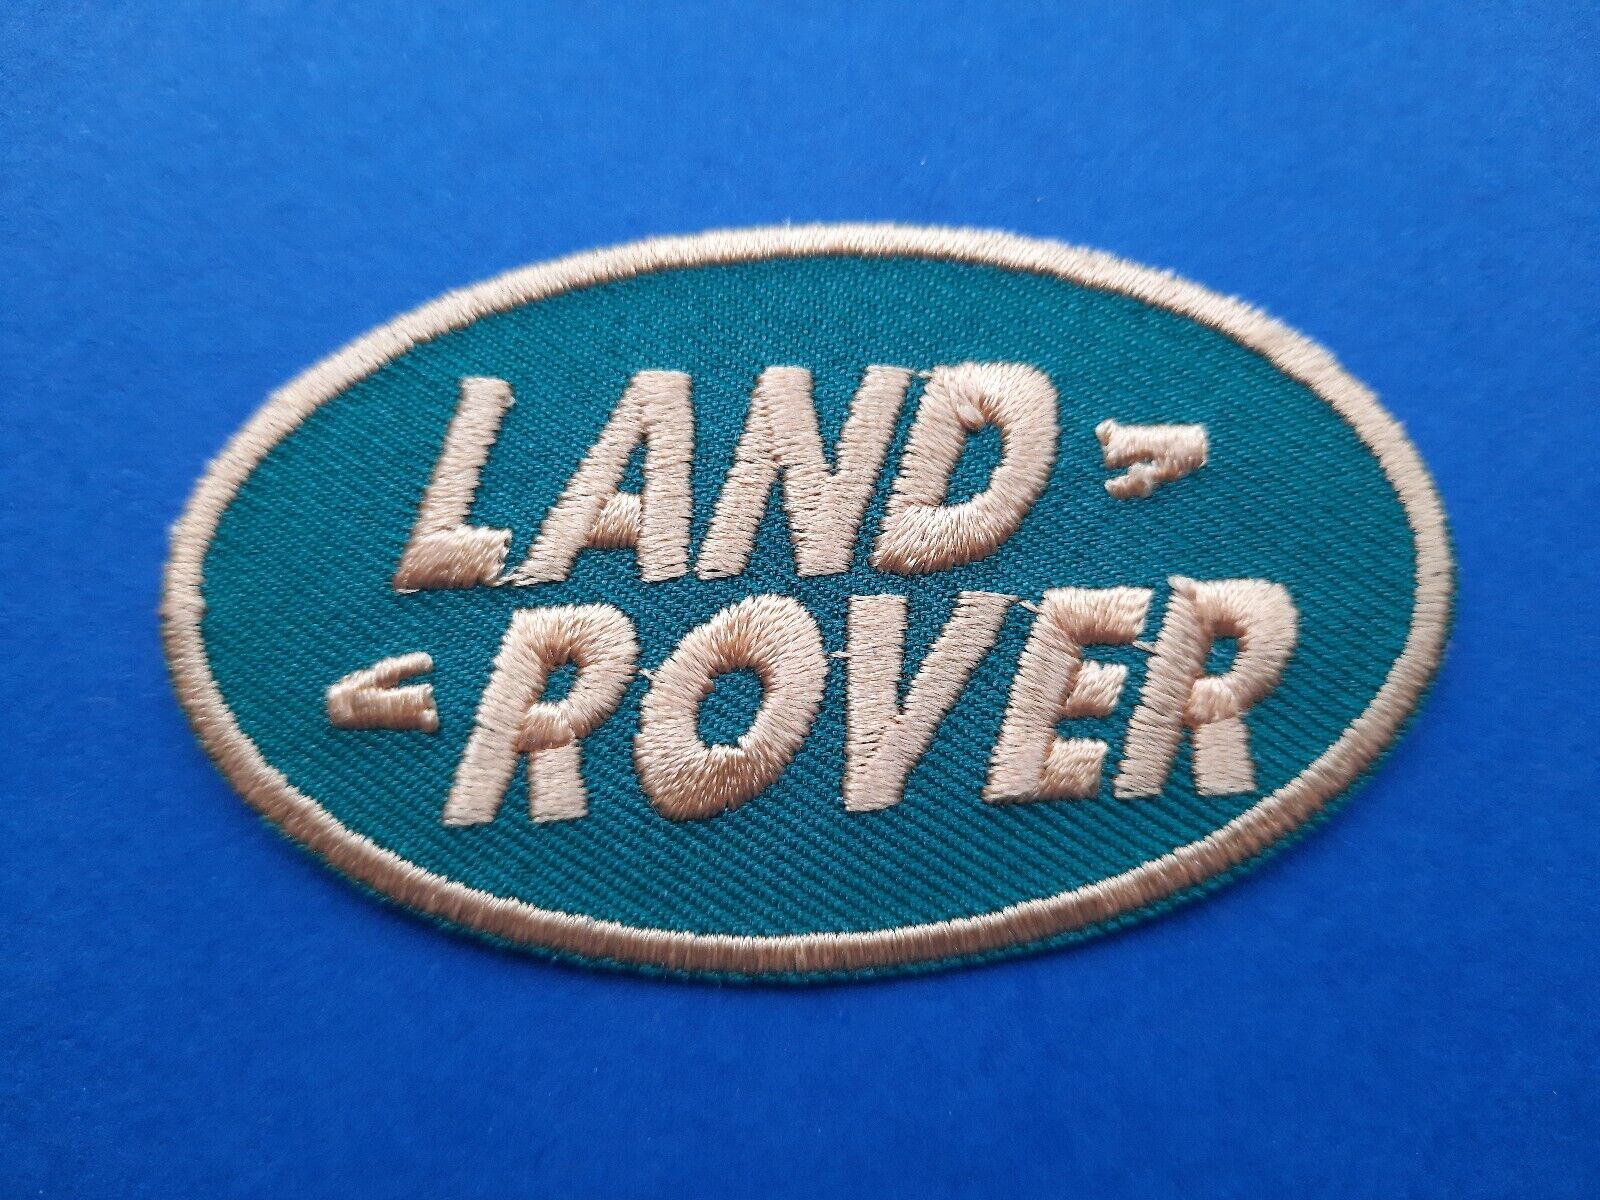 Motorsport Motor Racing Car Patch Sew / Iron On Badge:- Land Rover